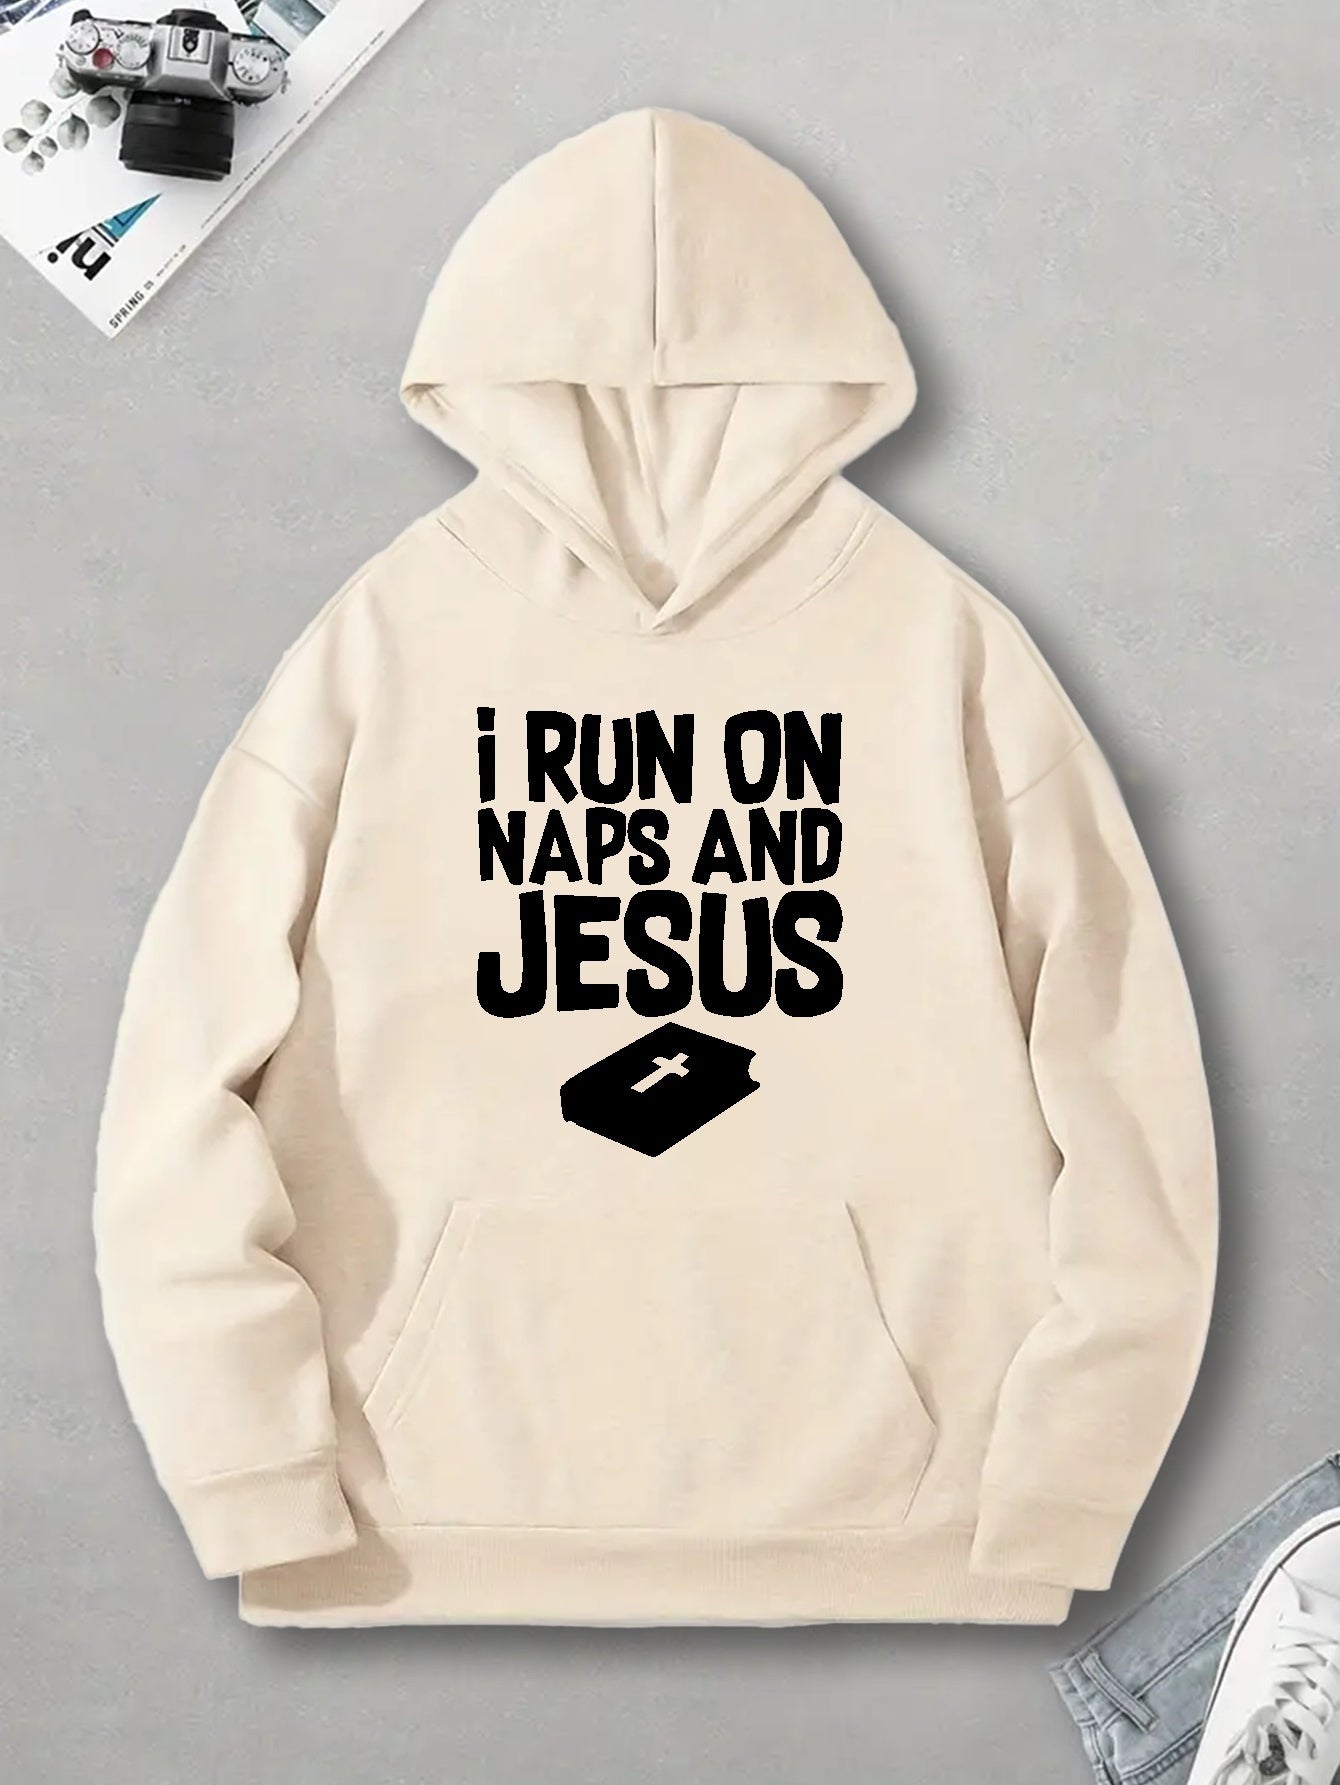 I RUN ON NAPS AND JESUS Men's Christian Pullover Hooded Sweatshirt claimedbygoddesigns